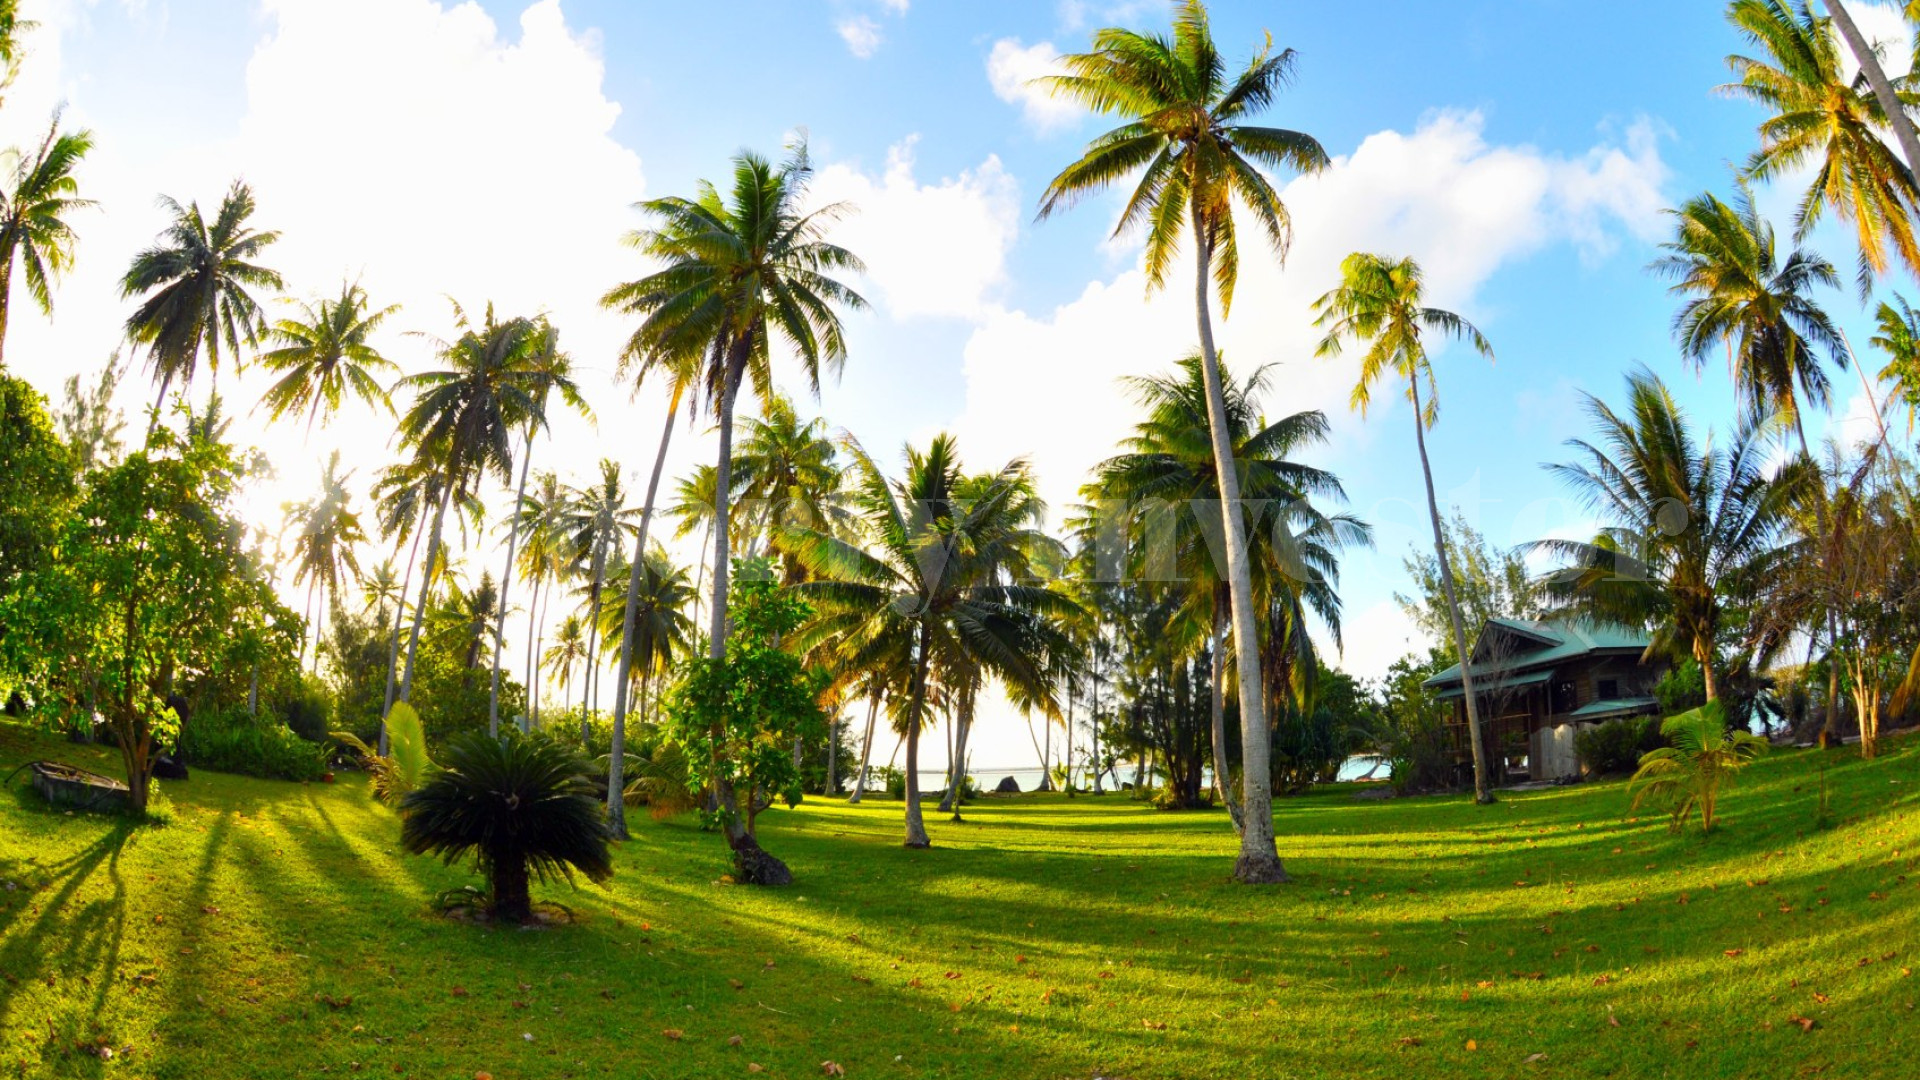 Private Island Residence Dream Location with Amazing Views of Bora Bora